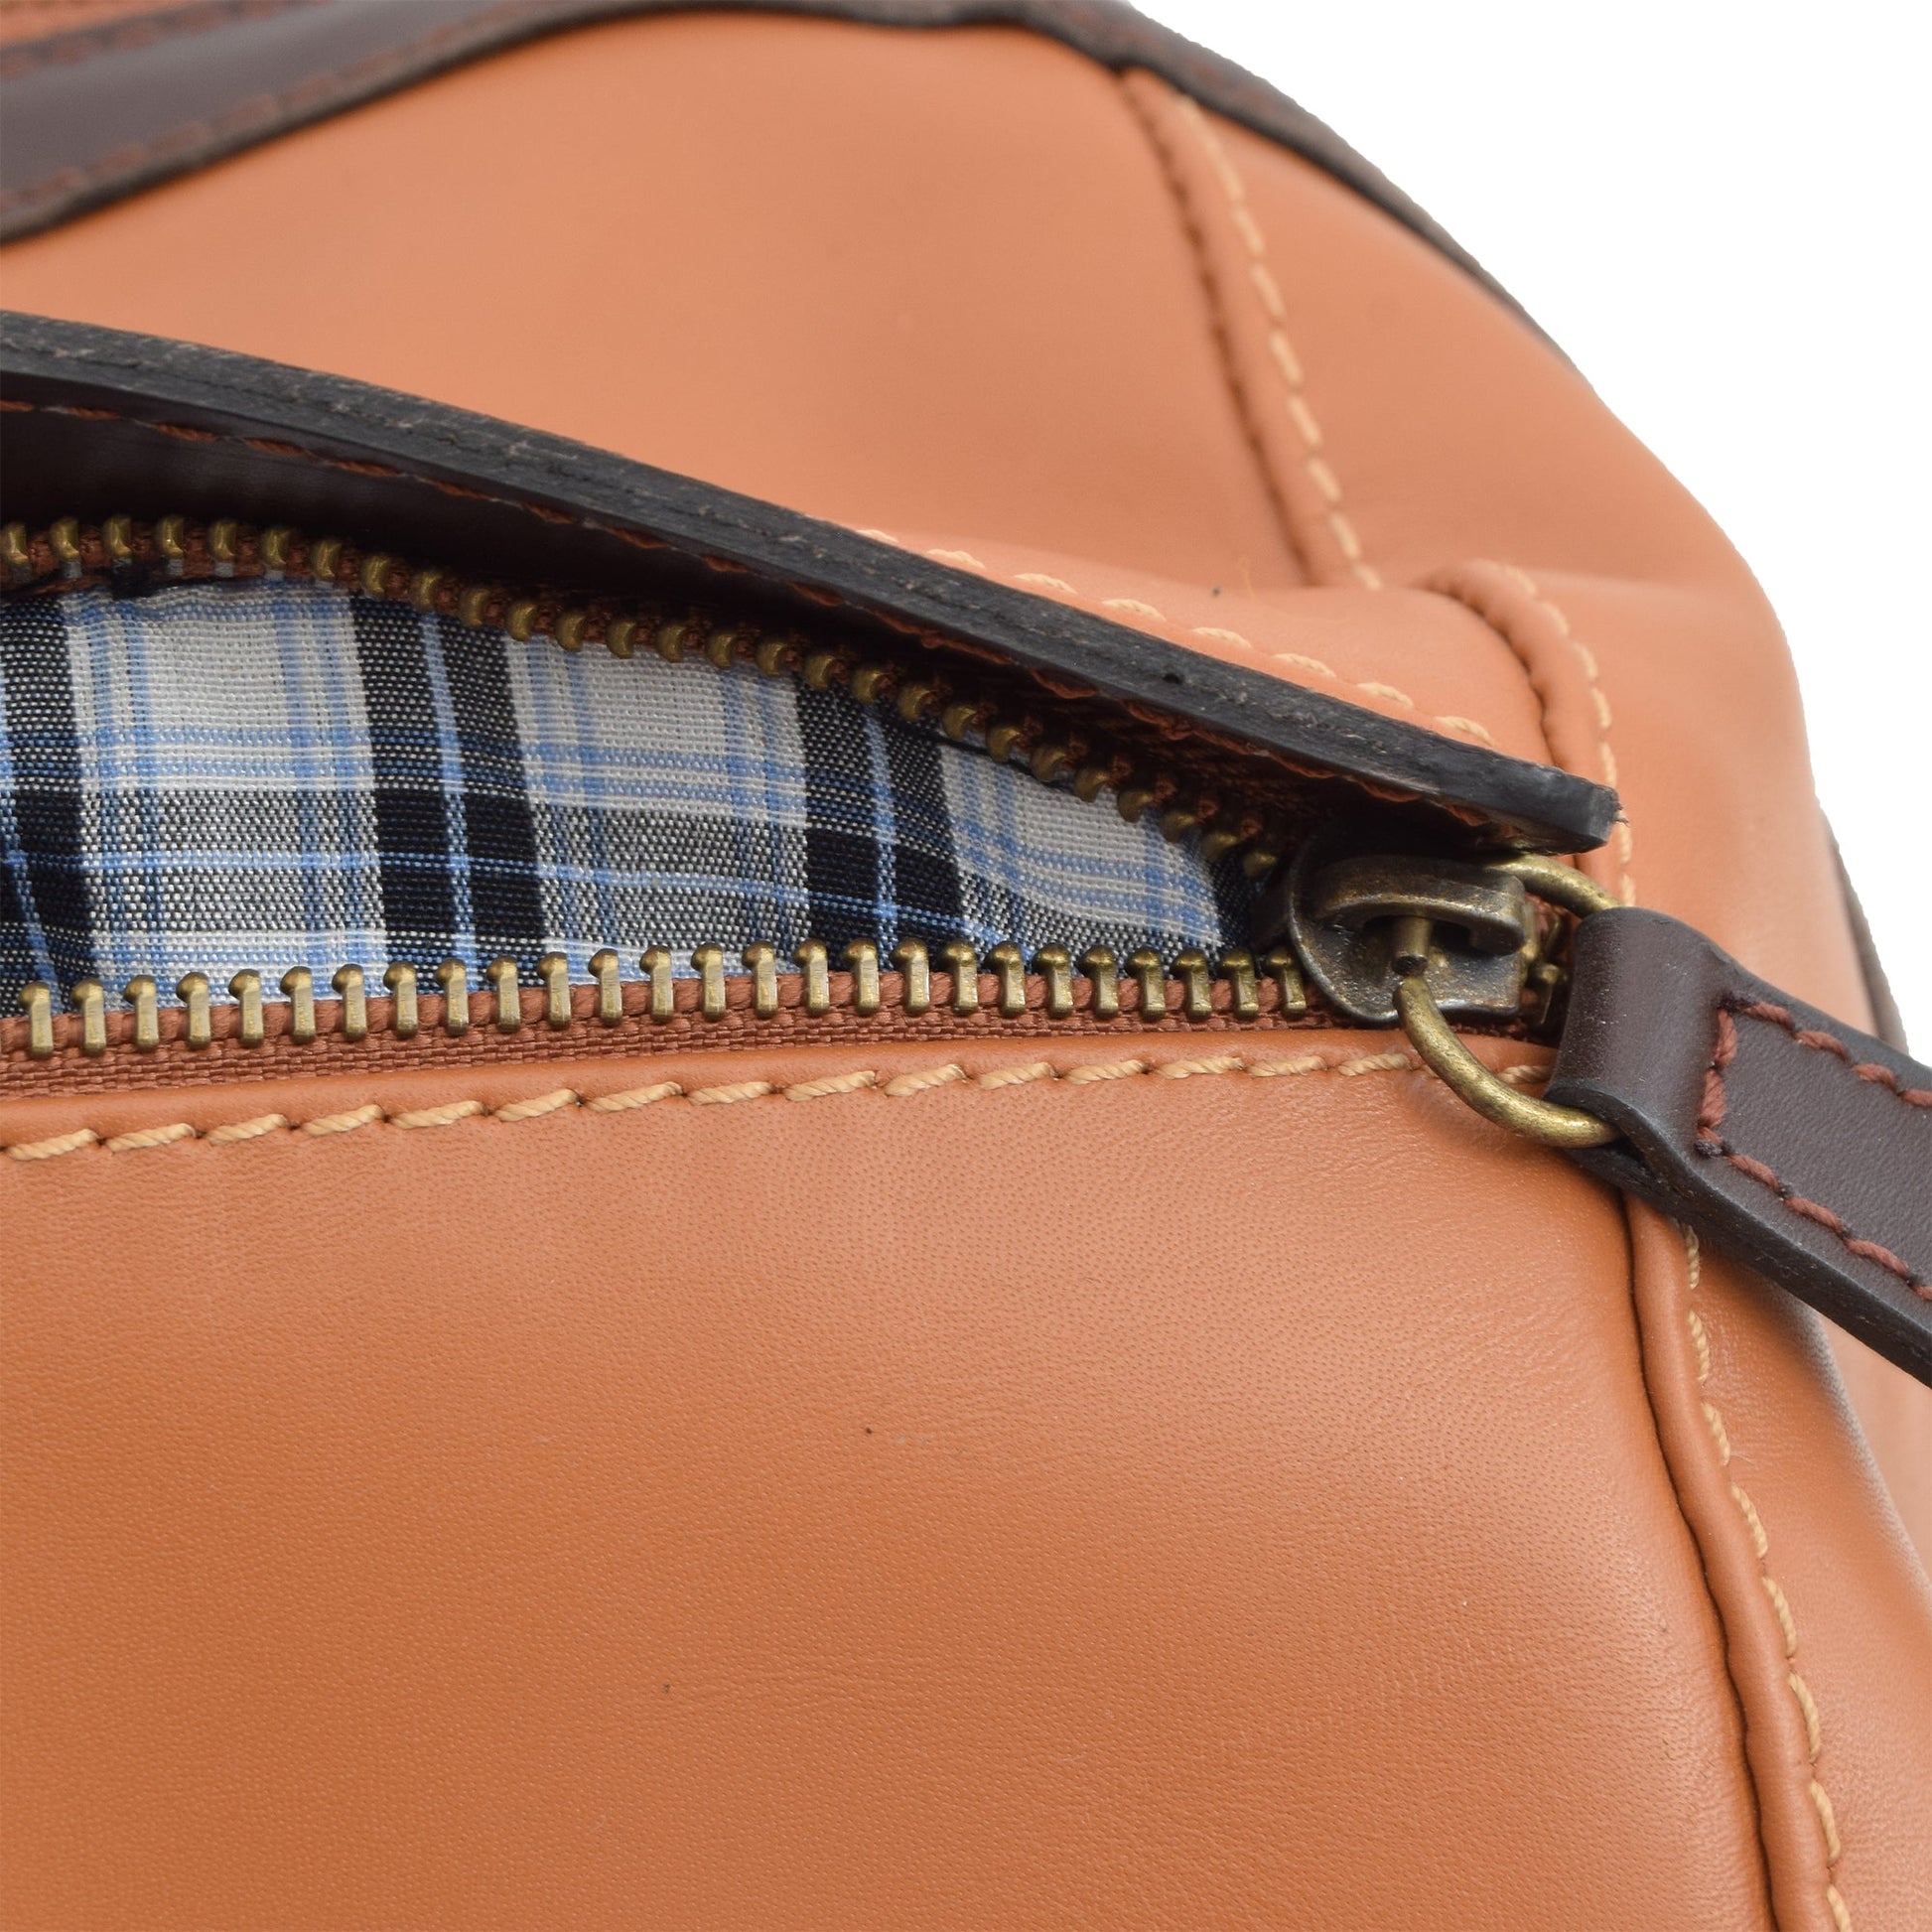 Phoebusia Tan Leather Backpacks - Zengoda Shop online from Artisan Brands